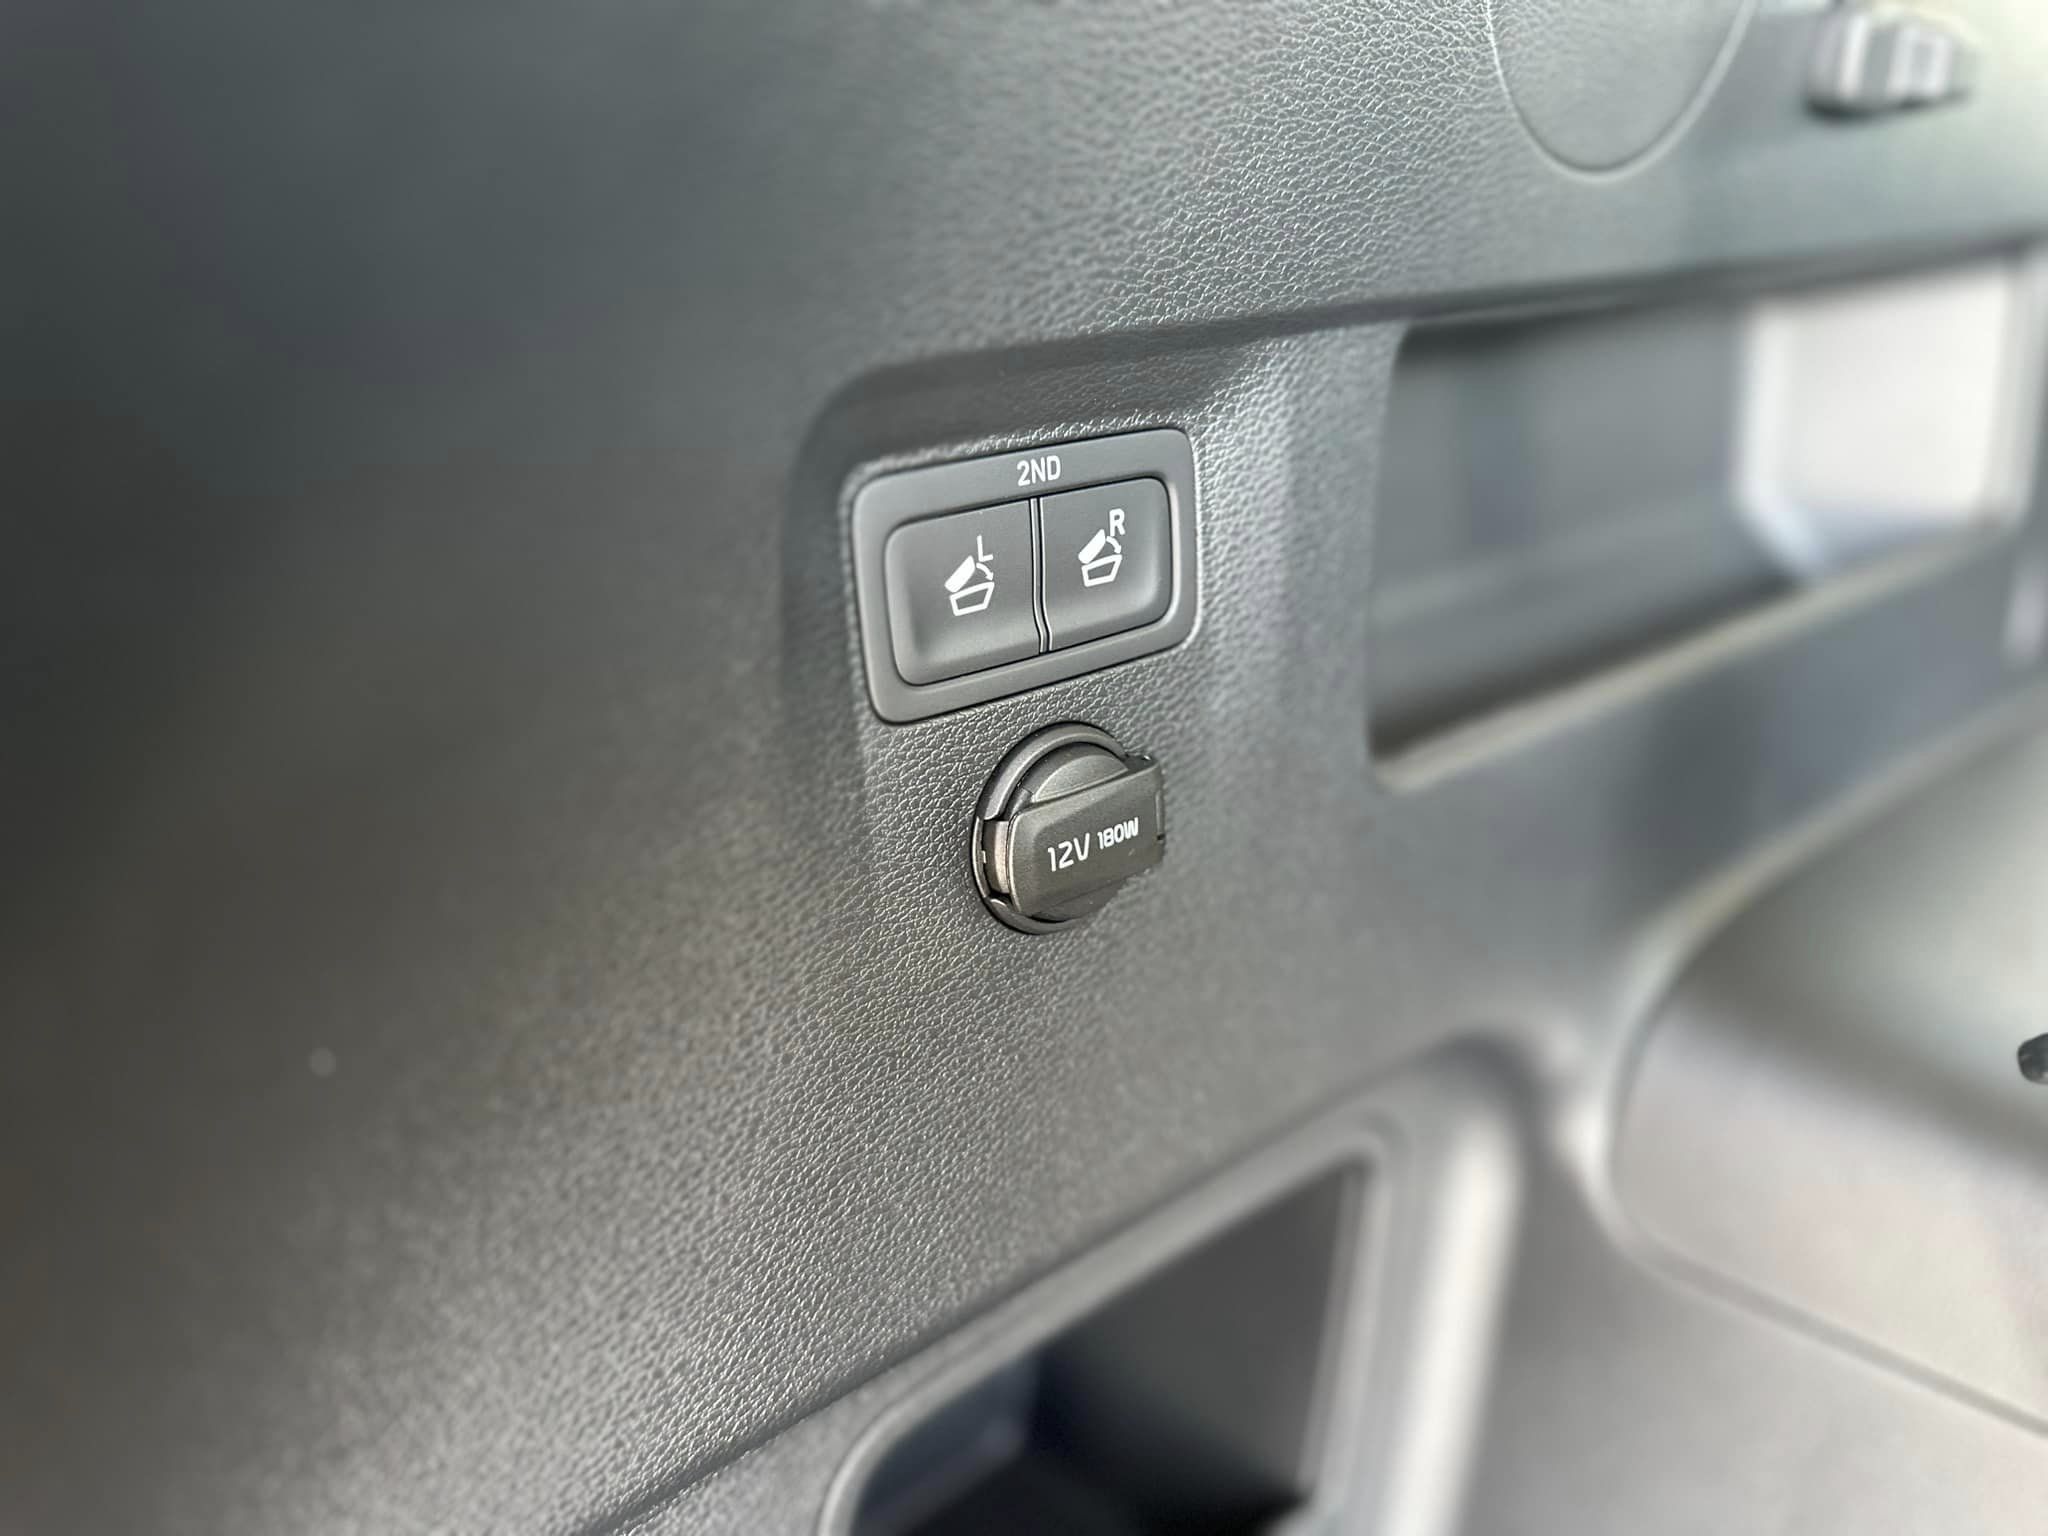 2023 Kia Telluride - EX Trim - Gravity Gray - Rear 2nd Row Seat Drop Controls